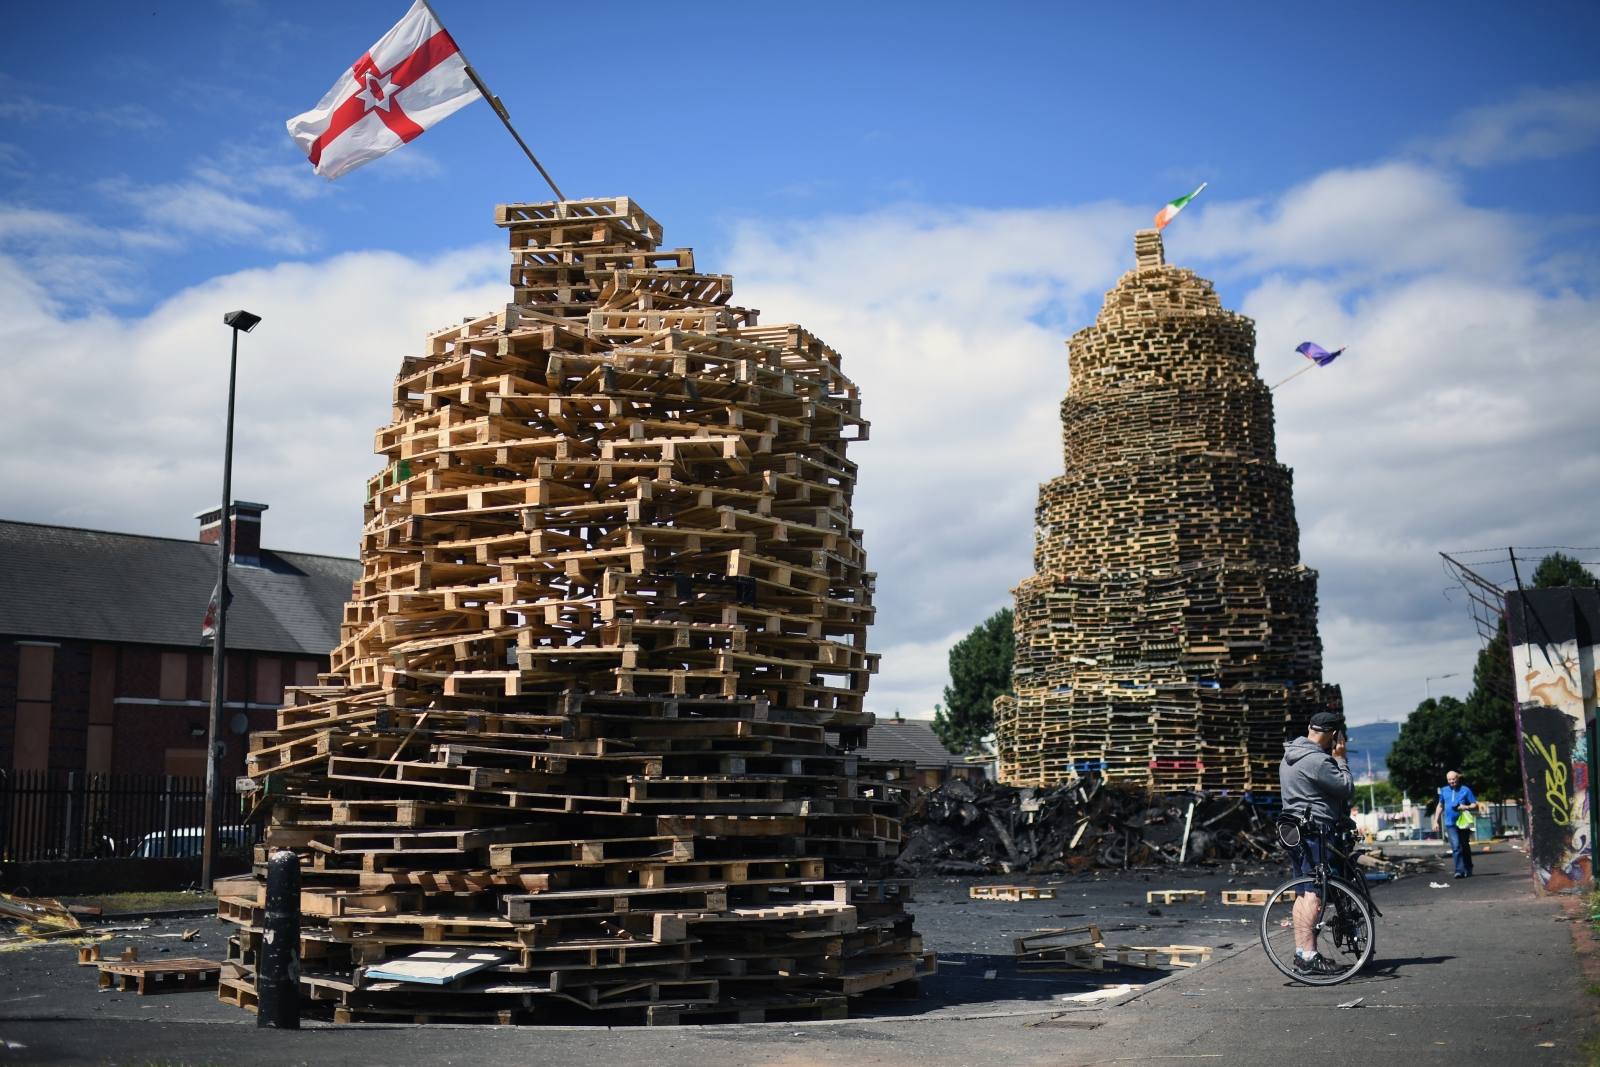 Northern Ireland Loyalist bonfires eleventh